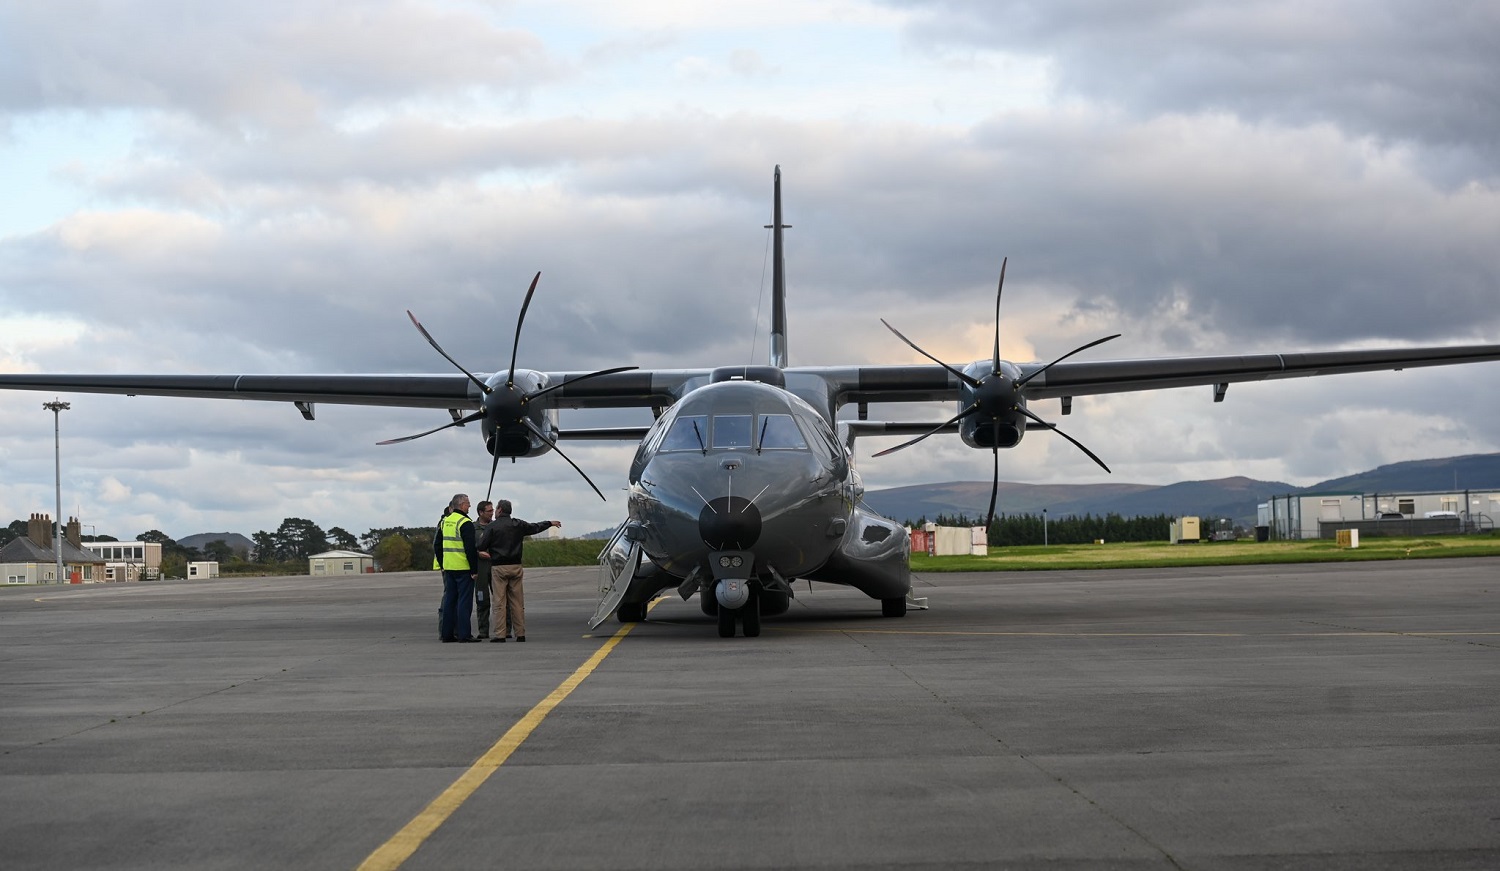 The Irish Air Corps C295 maritime patrol aircraft arriving into Casement Aerodrome near Dublin.